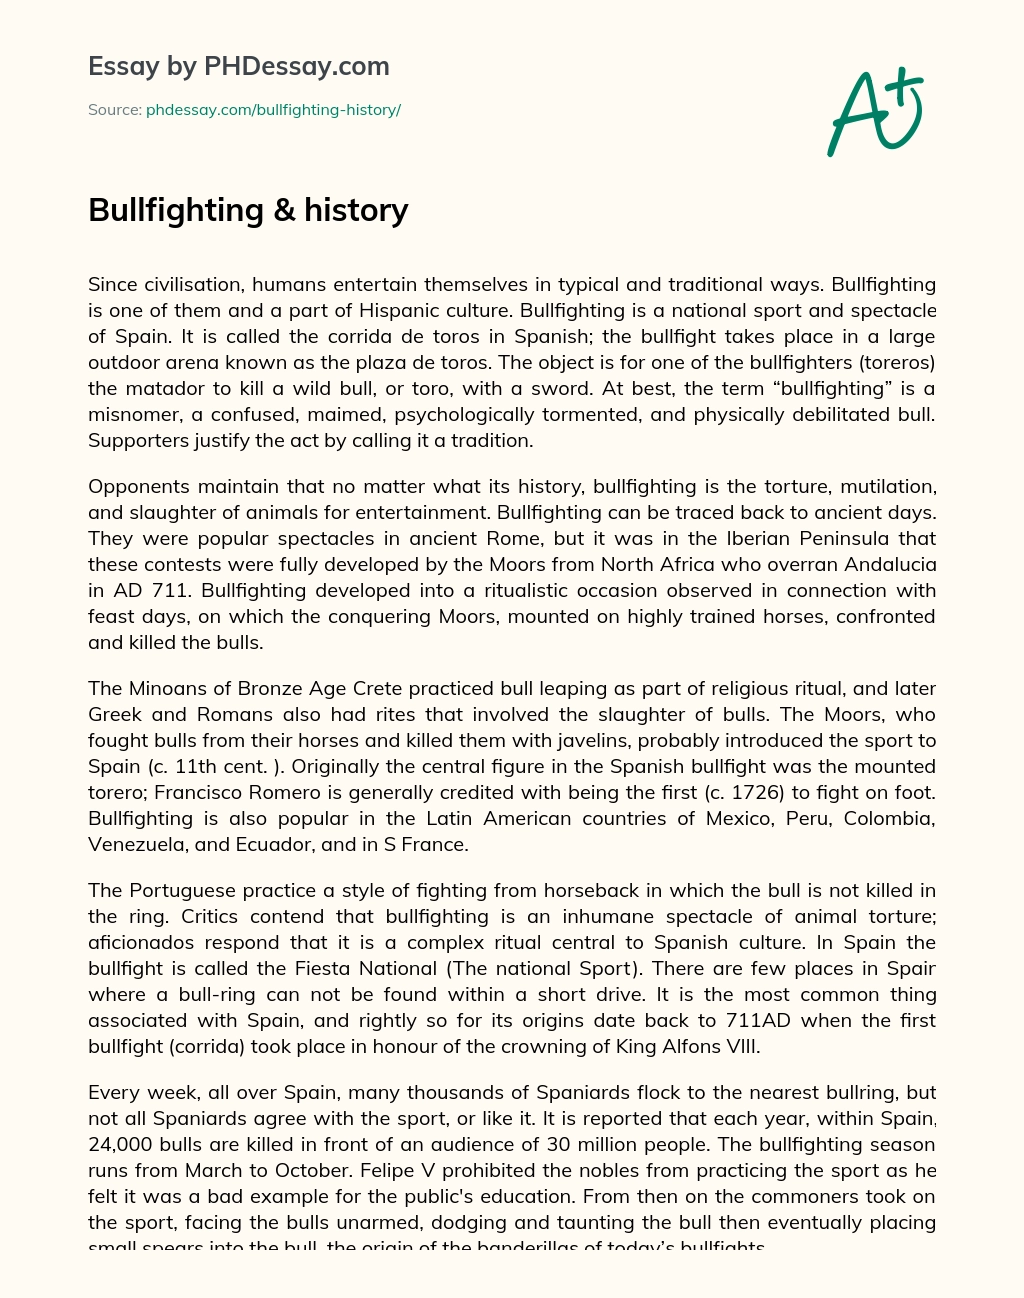 Bullfighting & history essay